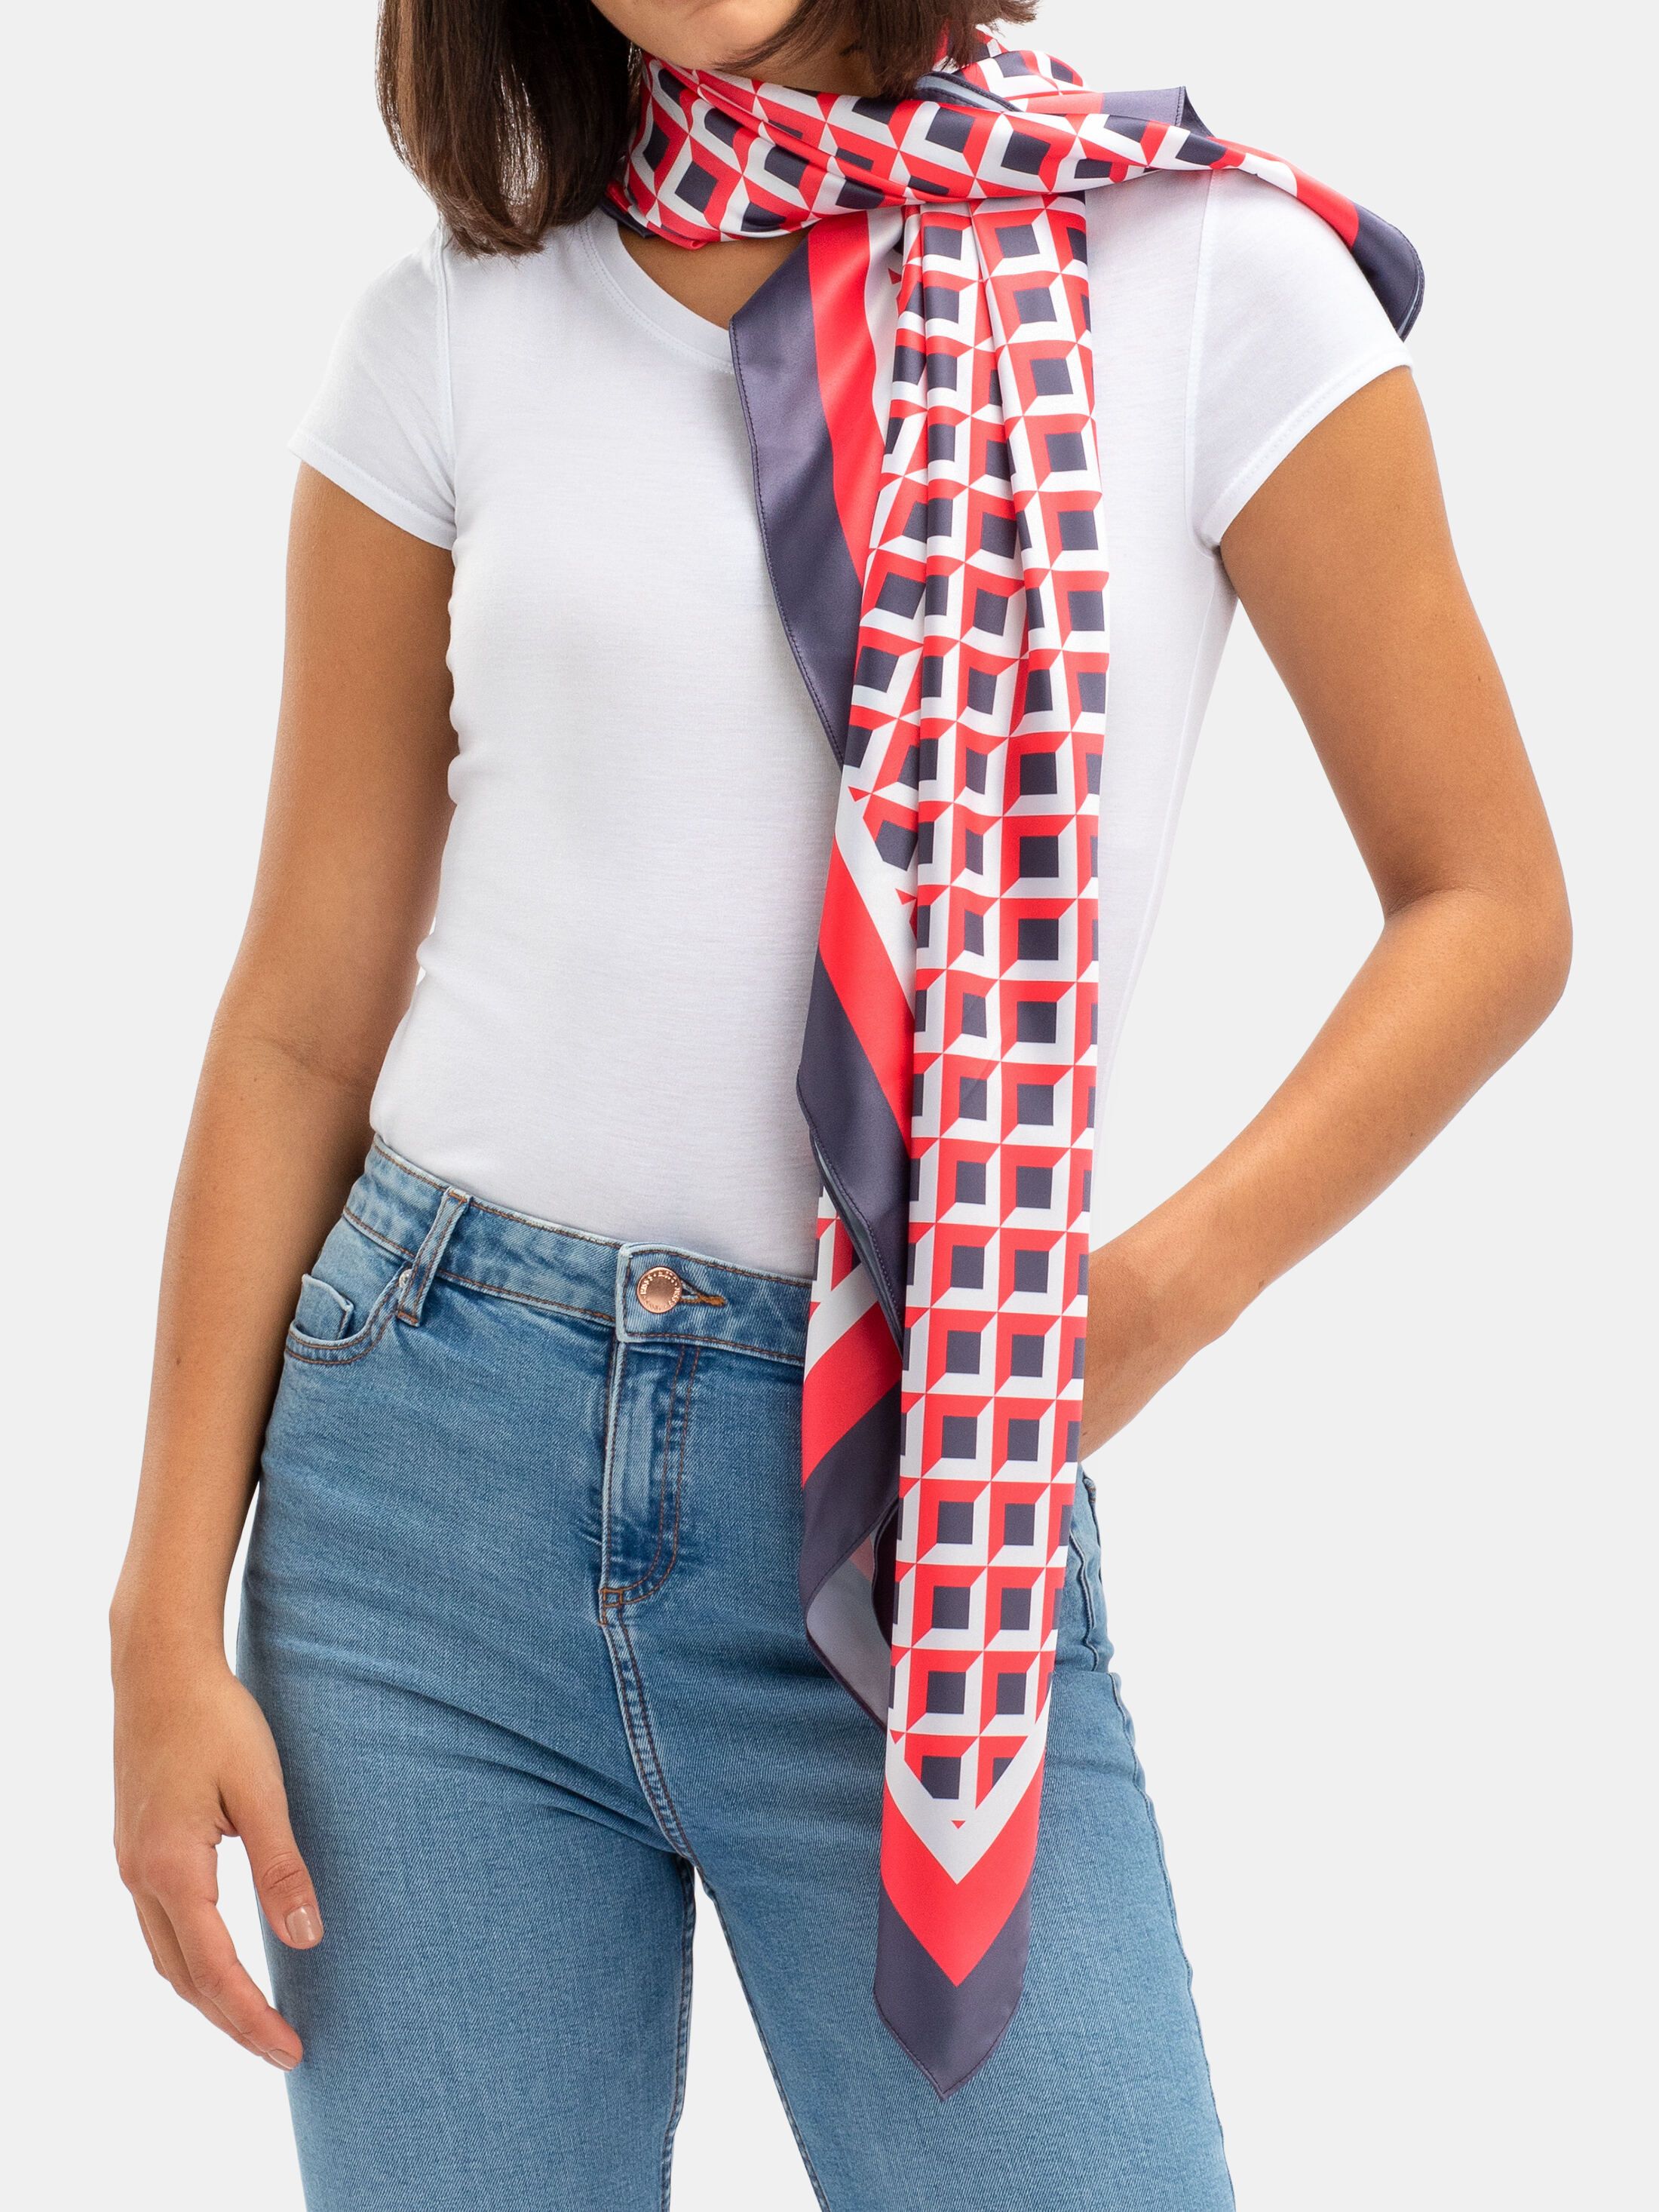 Contrado US Custom Printed Silk Scarves. Ready in 1-2 Day - Handmade Sustainably 